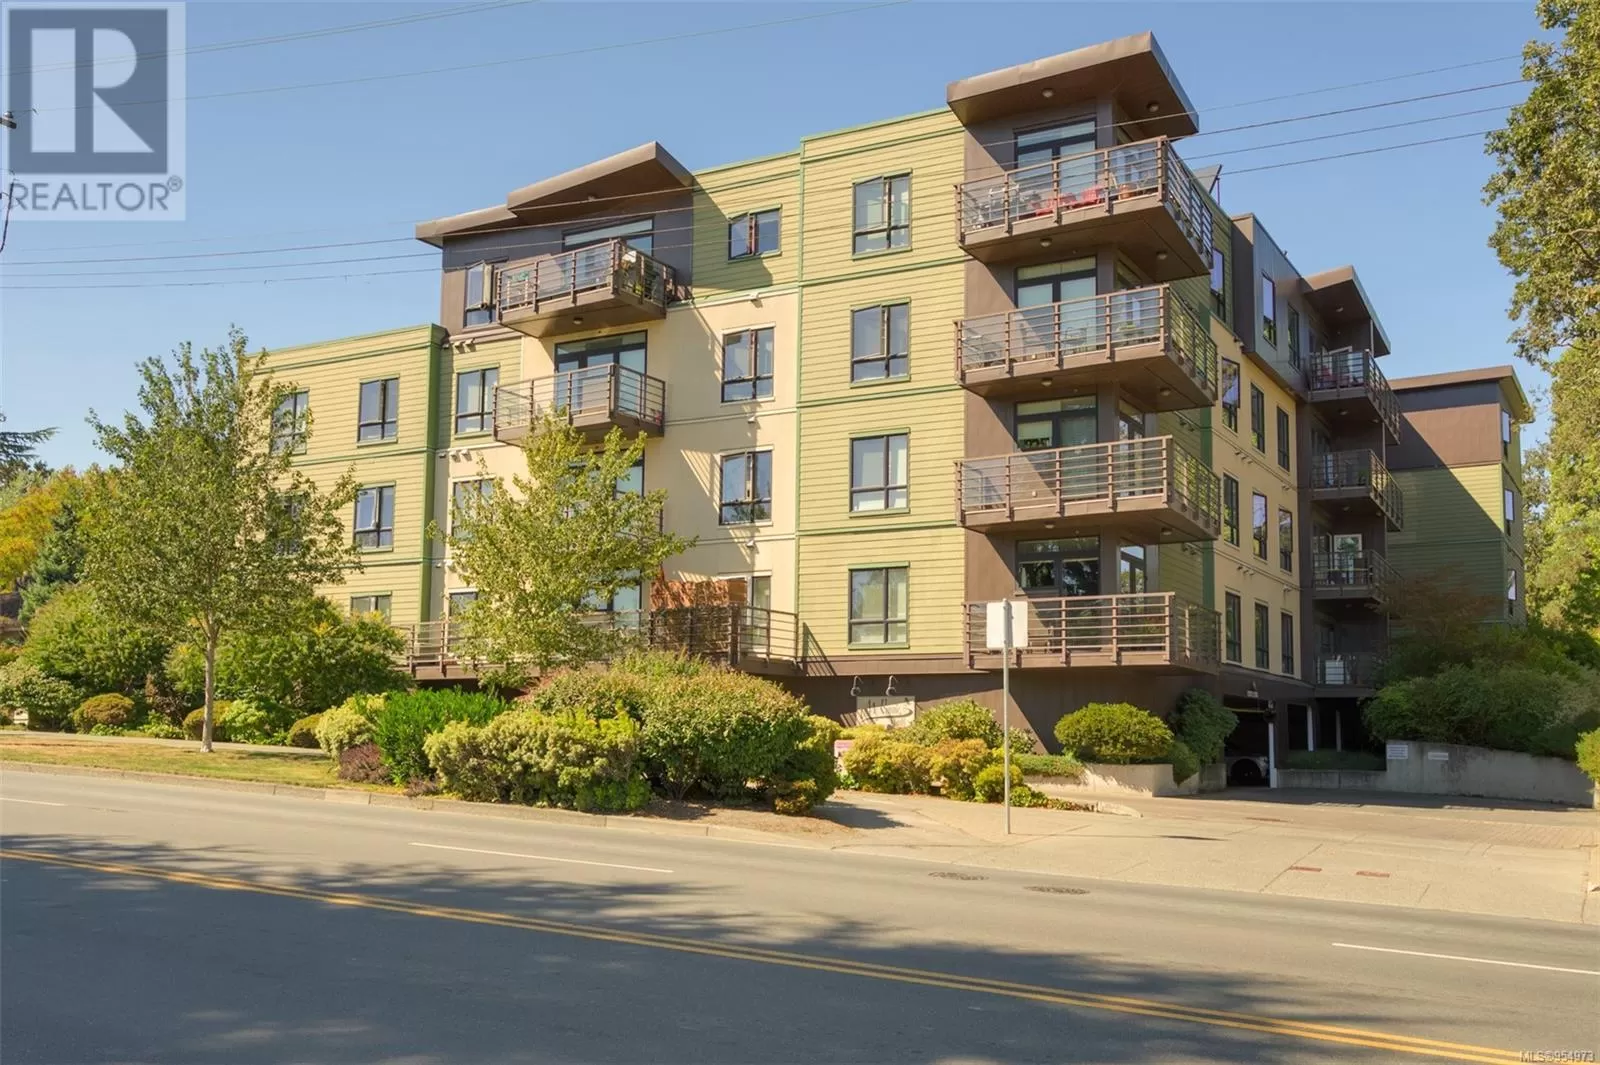 Apartment for rent: 401 982 Mckenzie Ave, Saanich, British Columbia V8X 3G7